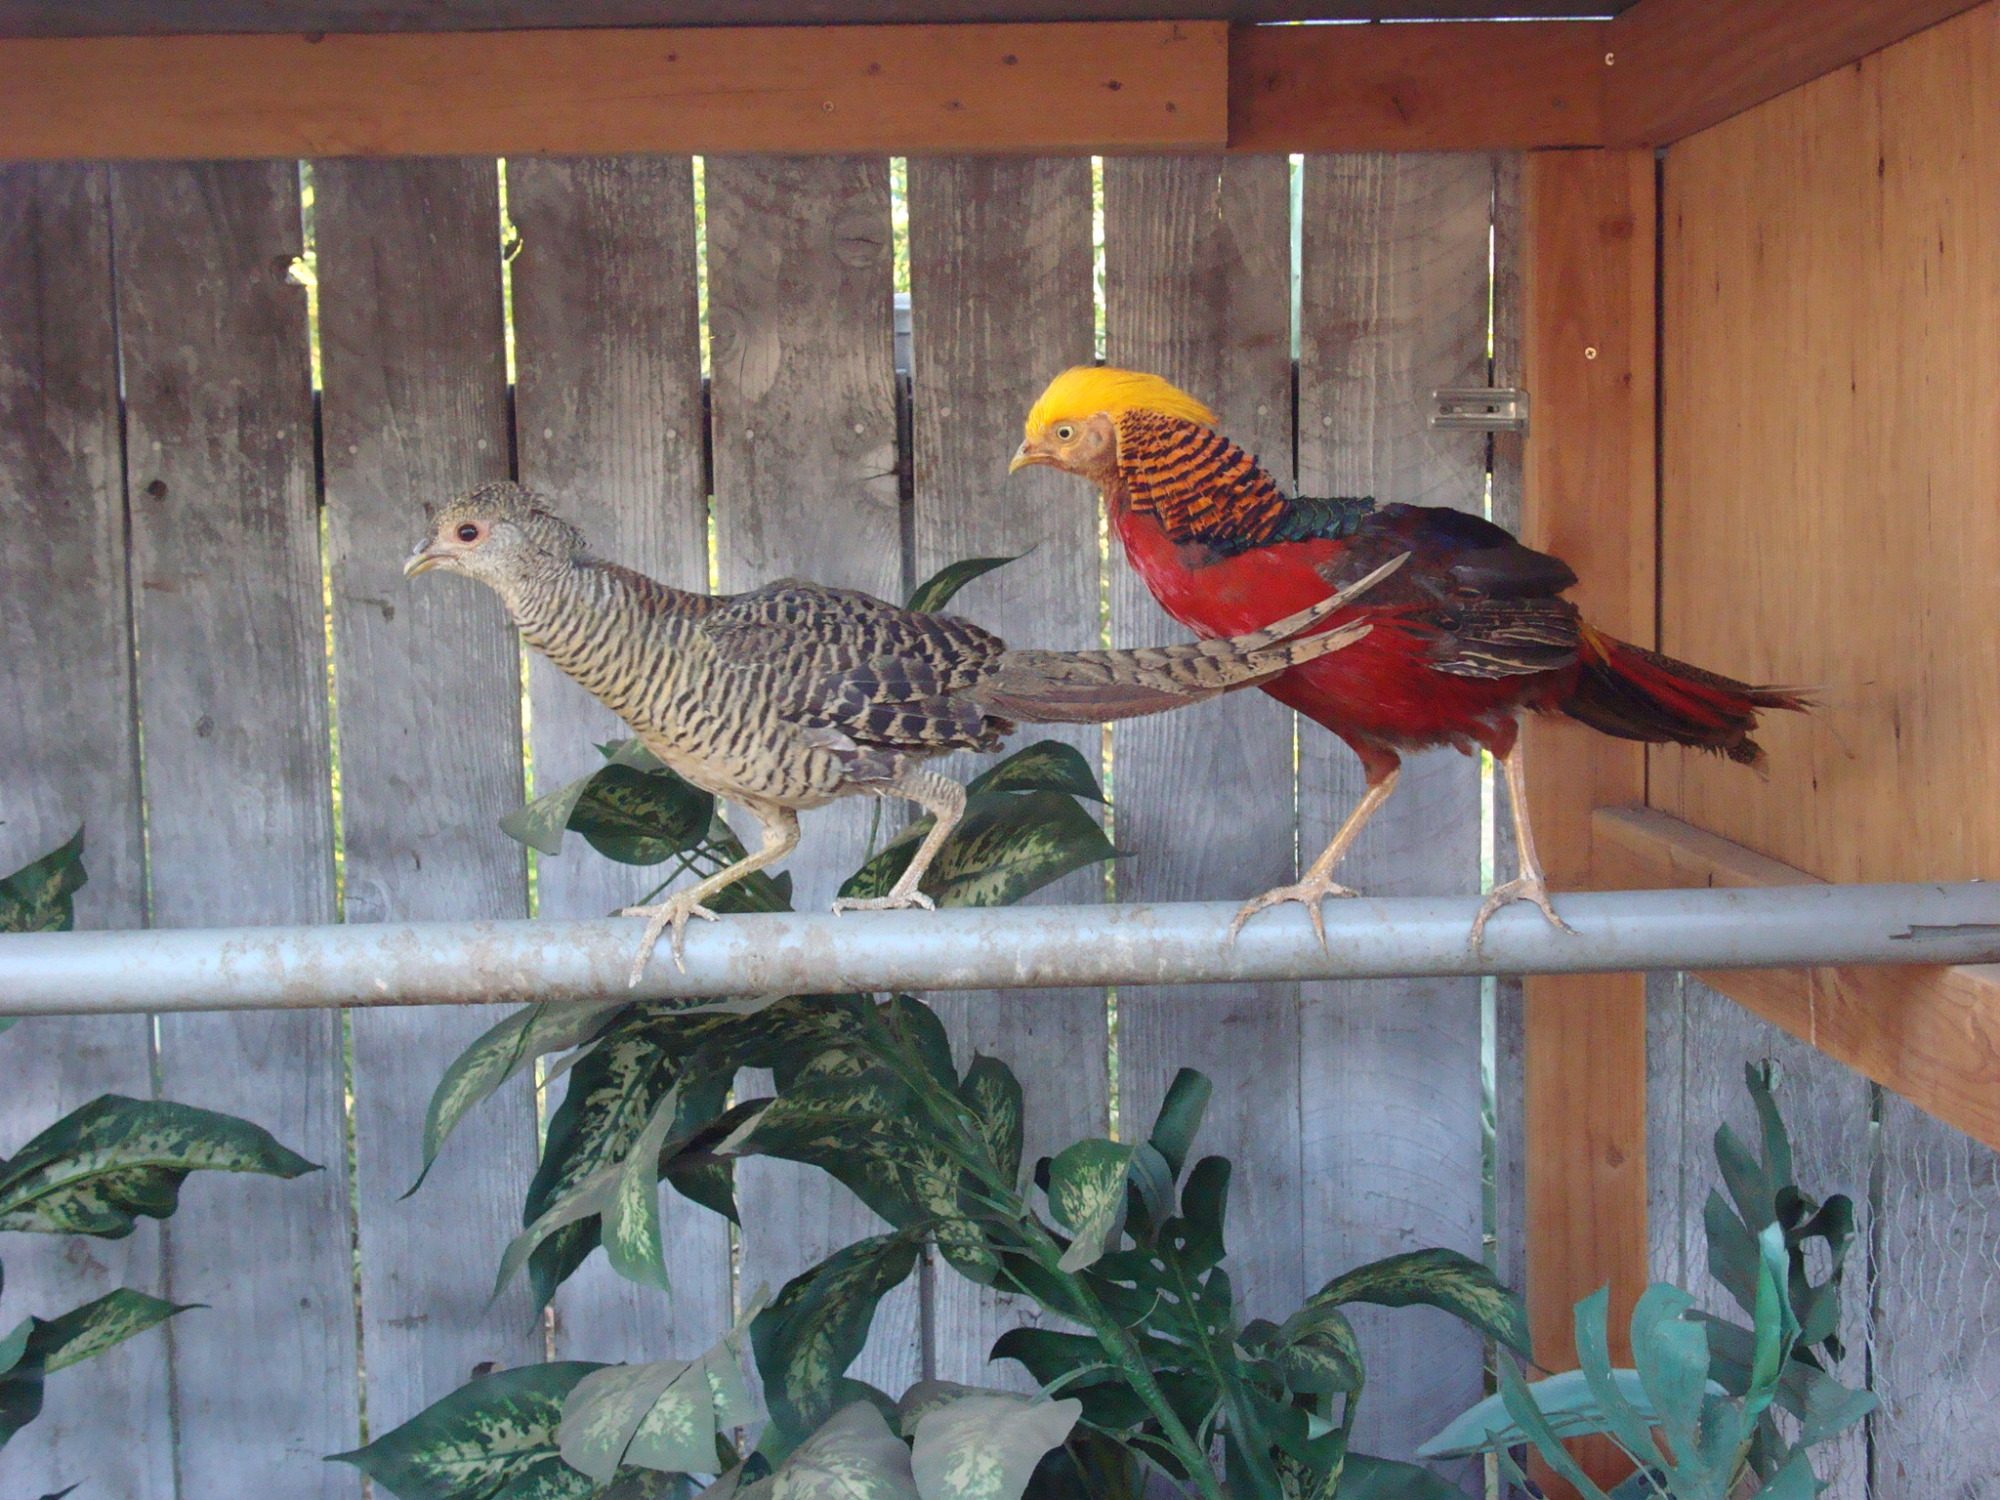 Red Golden Pheasant